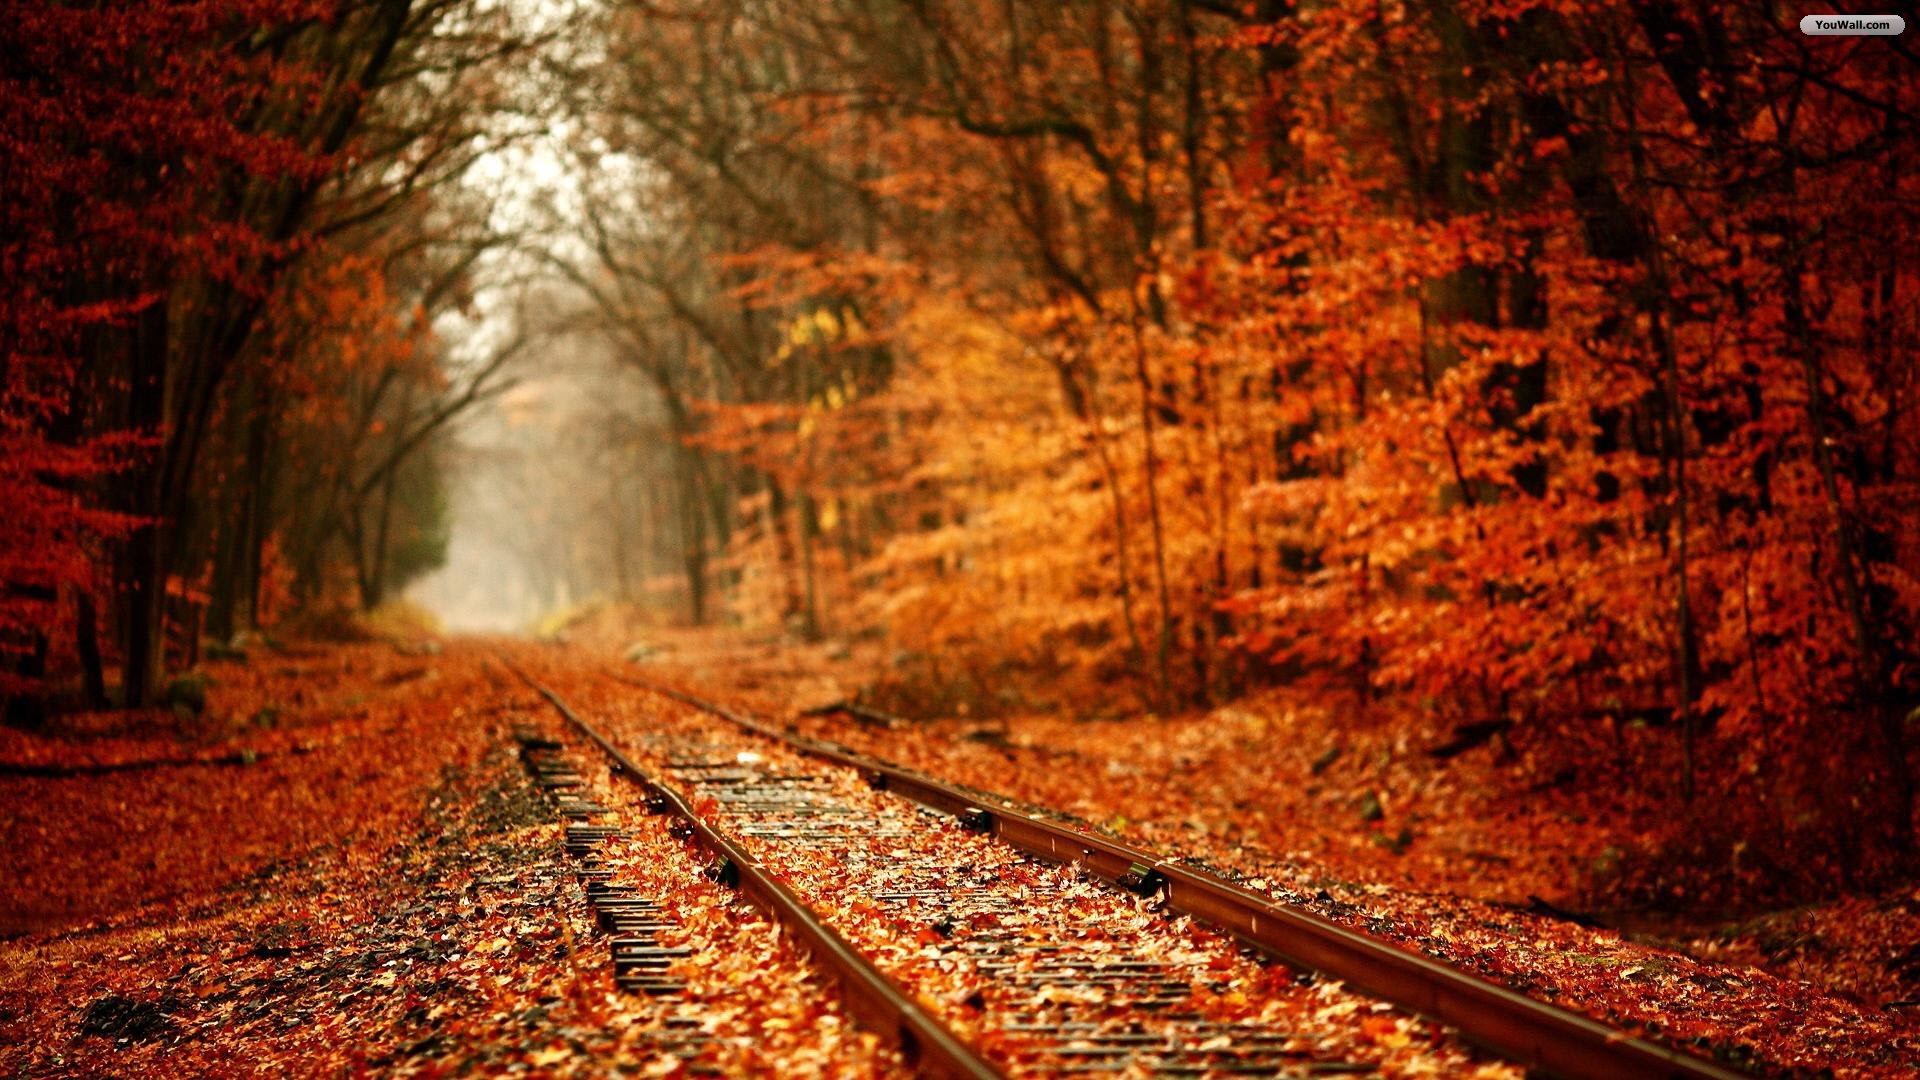 Autumn Railroad